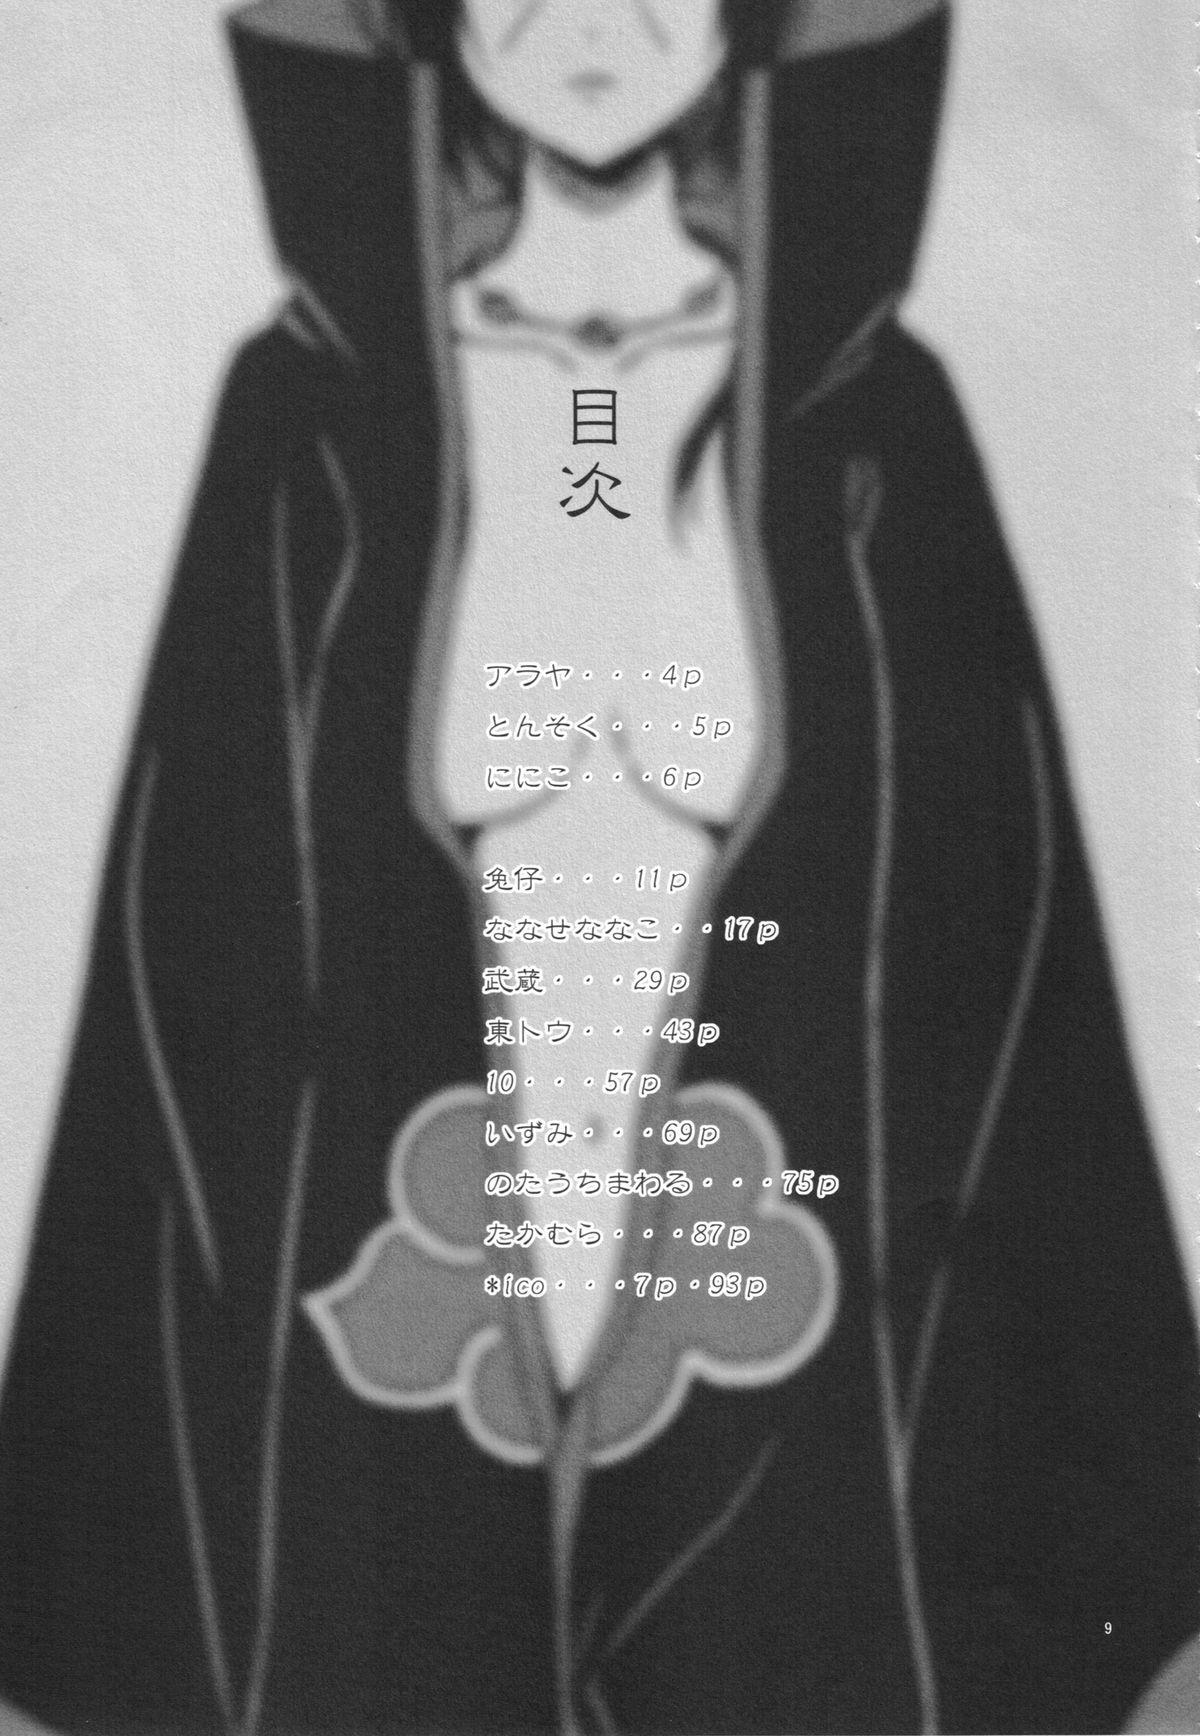 Itachi Nyotai-ka Seijin Muke Anthology "Anekan" 7